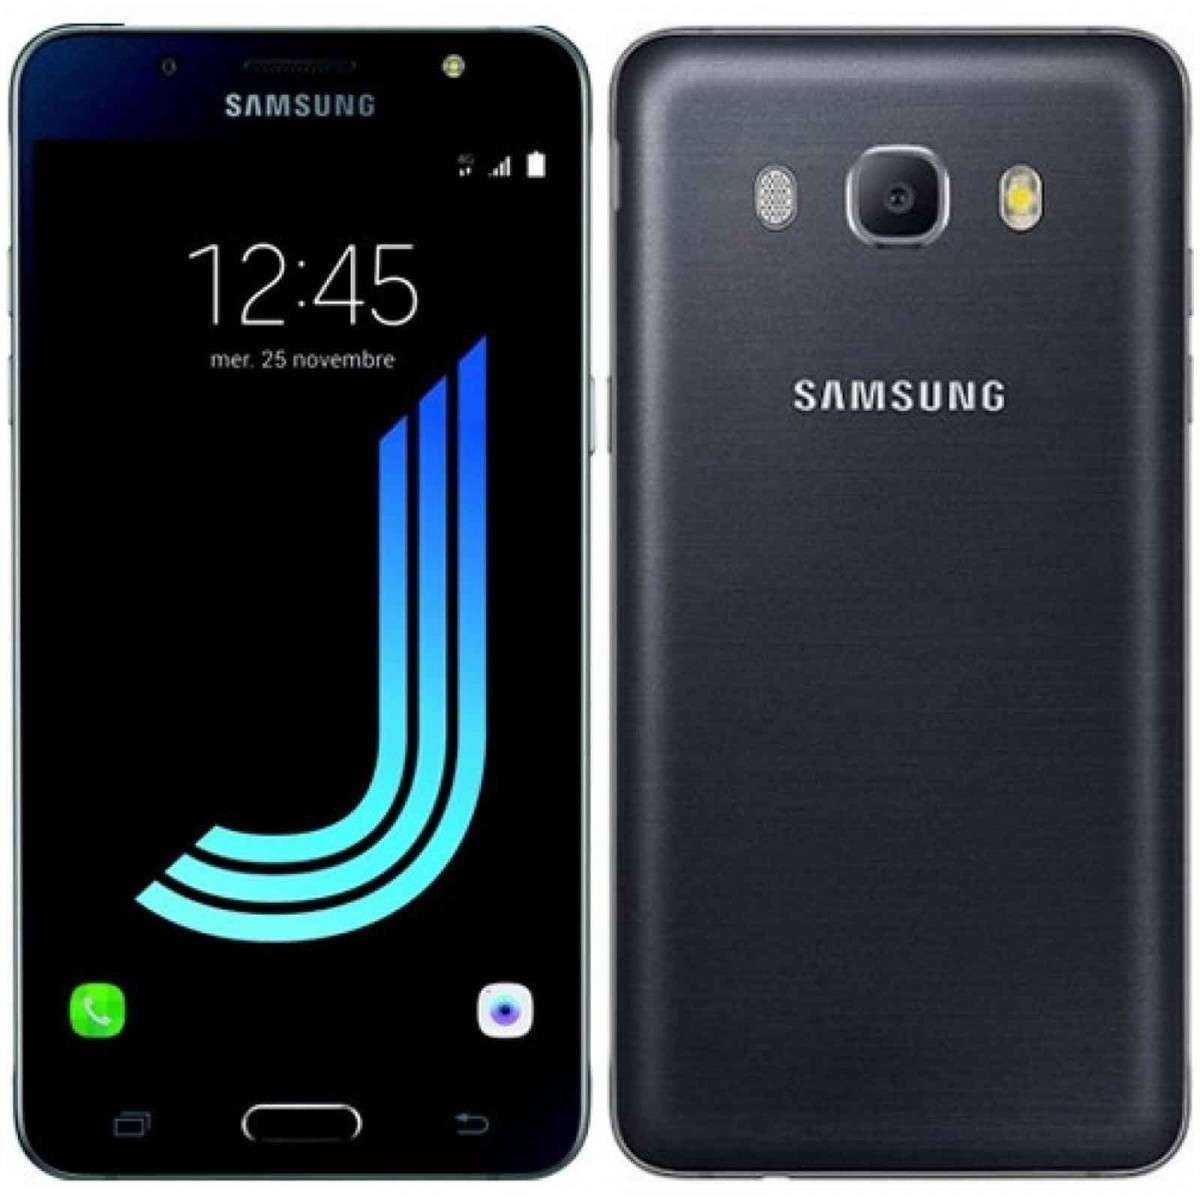 Джи 5 экран. Samsung j5 2016. Samsung Galaxy j5 2016. Samsung Galaxy j5. Samsung Galaxy j5 6.